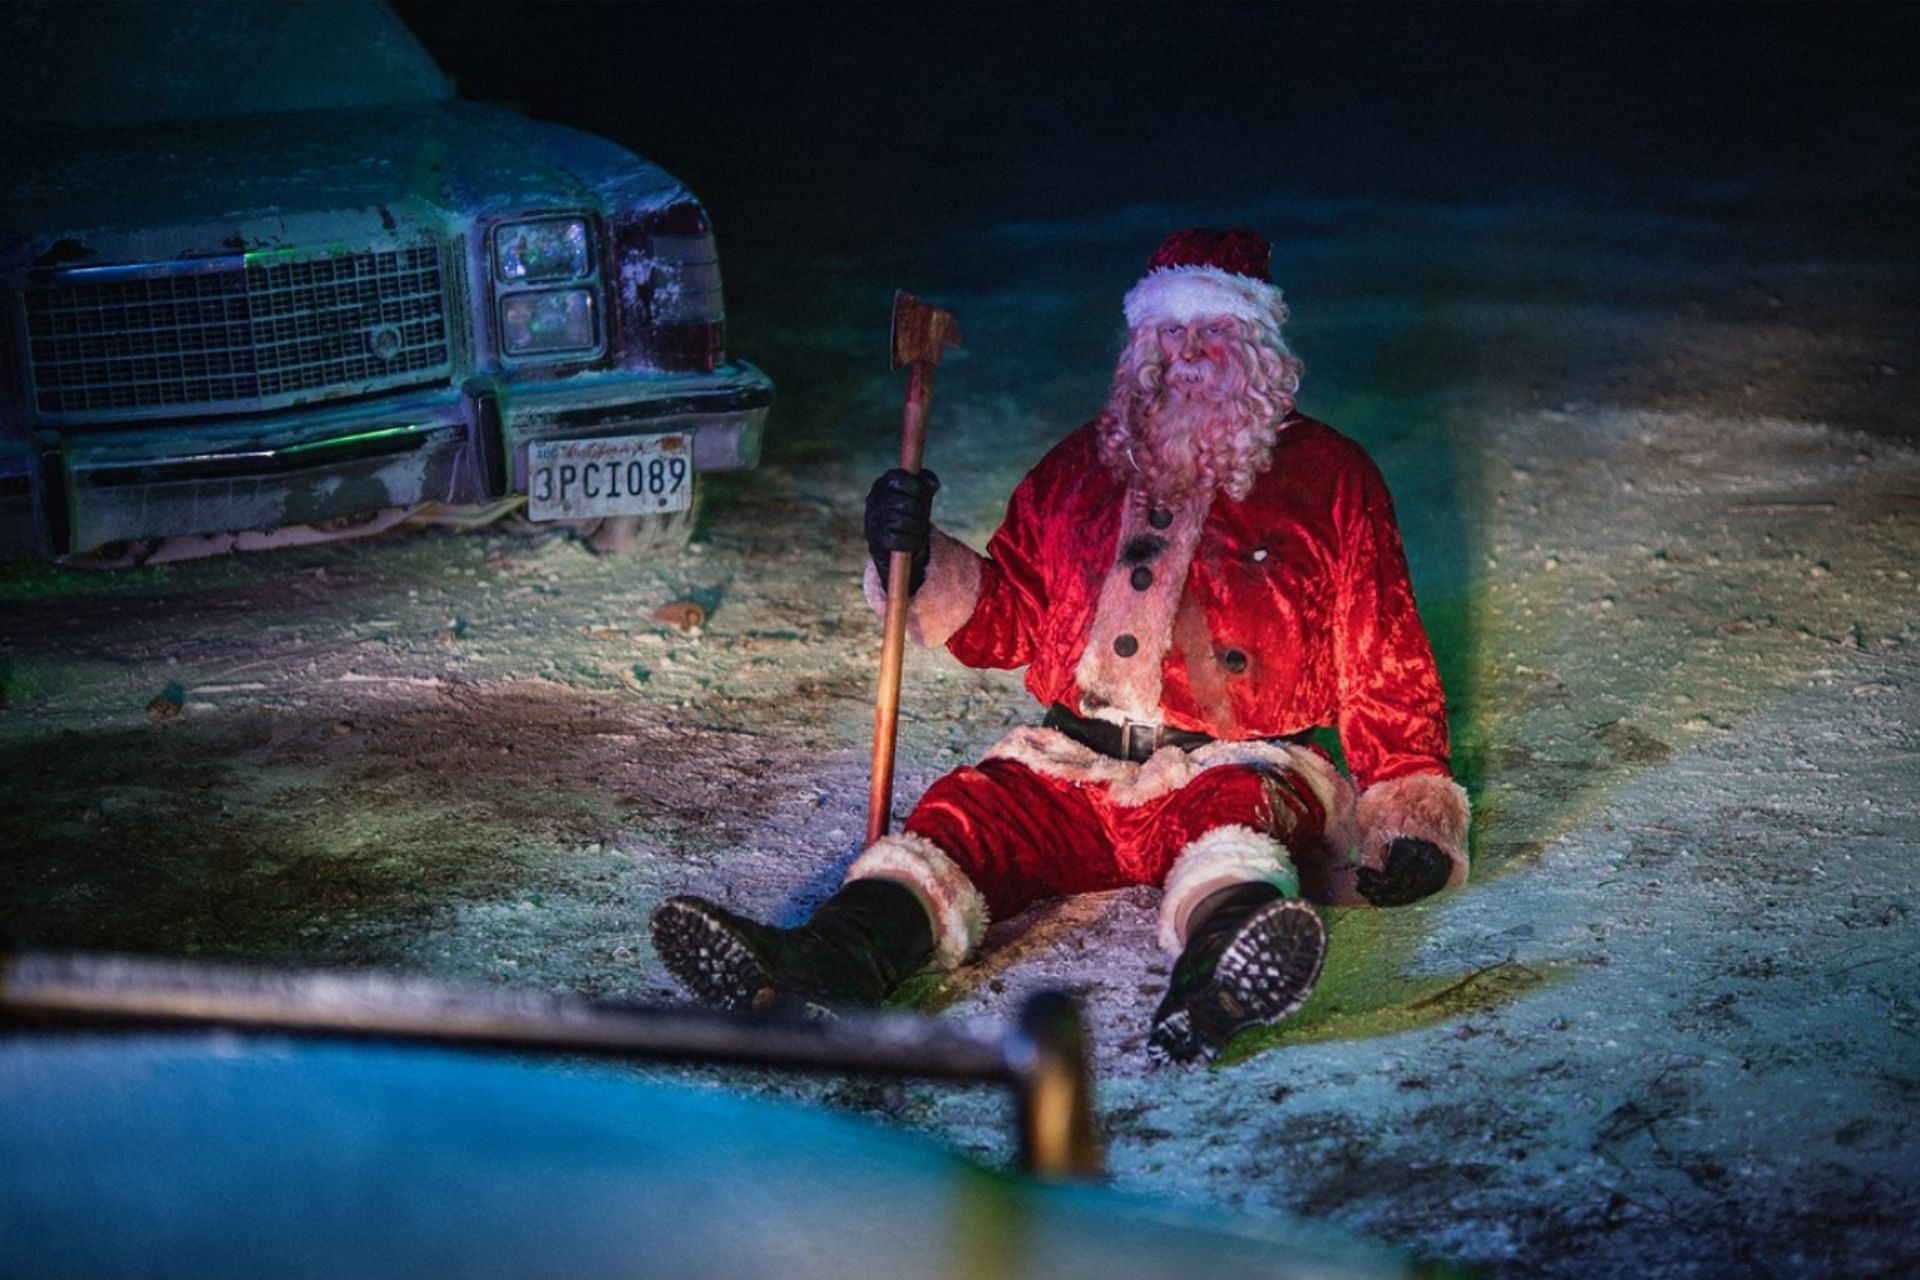 Abraham Benrubi portrays the horrific Santa in Christmas Bloody Christmas. (Photo via Rotten Tomatoes)